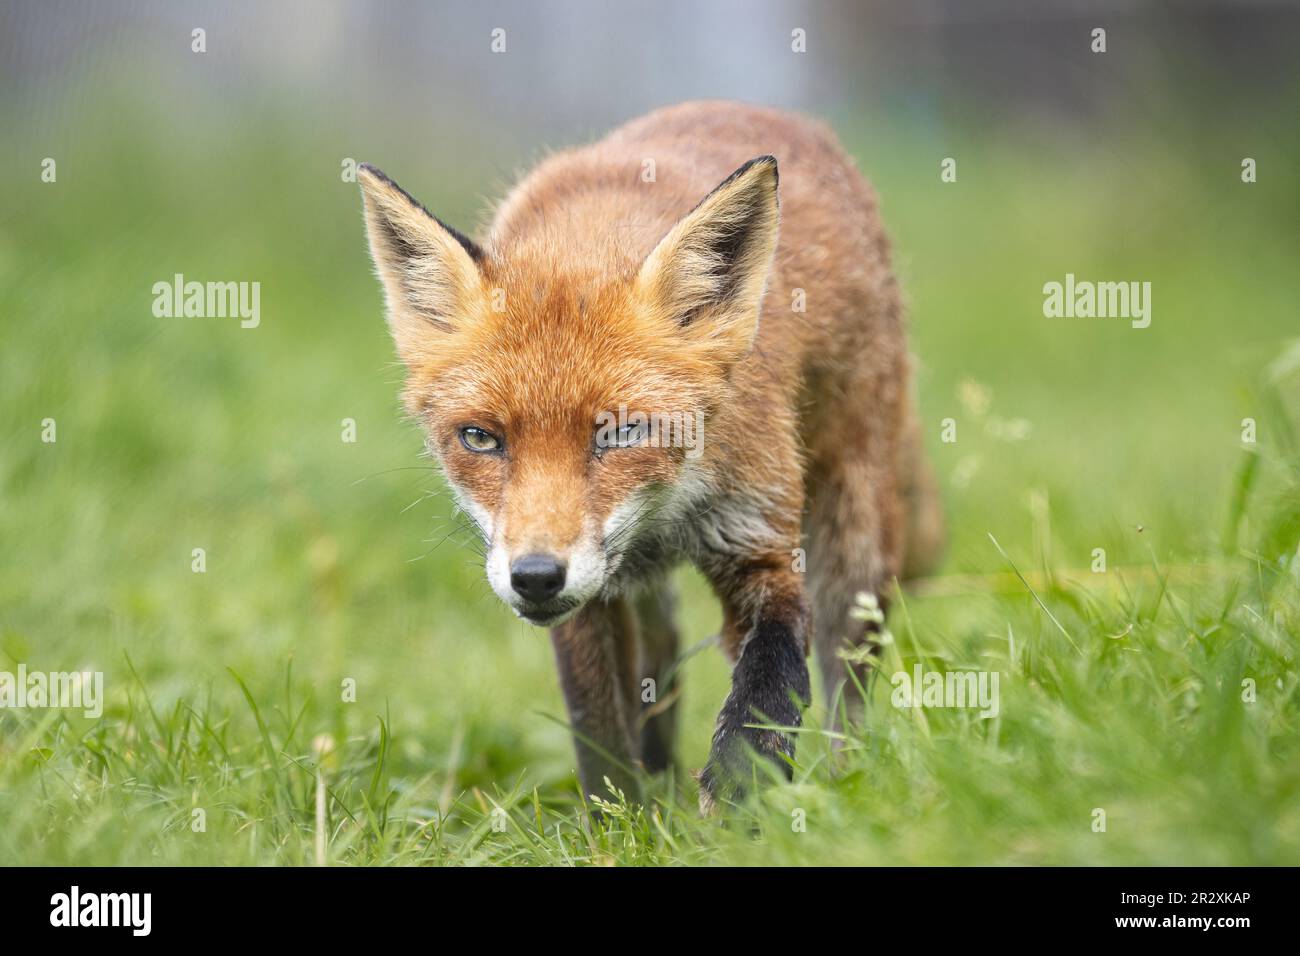 Green eyed fox walking towards camera in the green grass Stock Photo